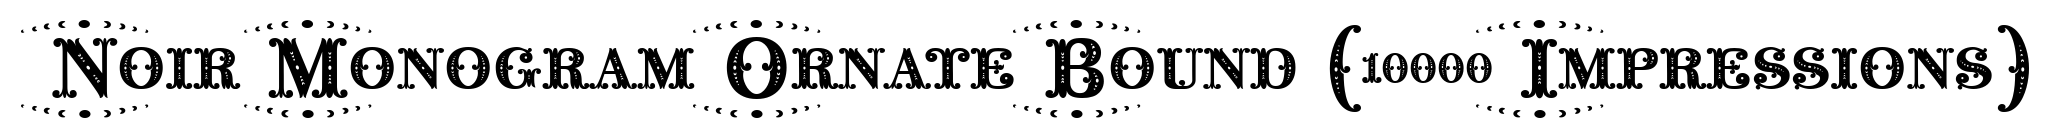 Noir Monogram Ornate Bound (10000 Impressions) image